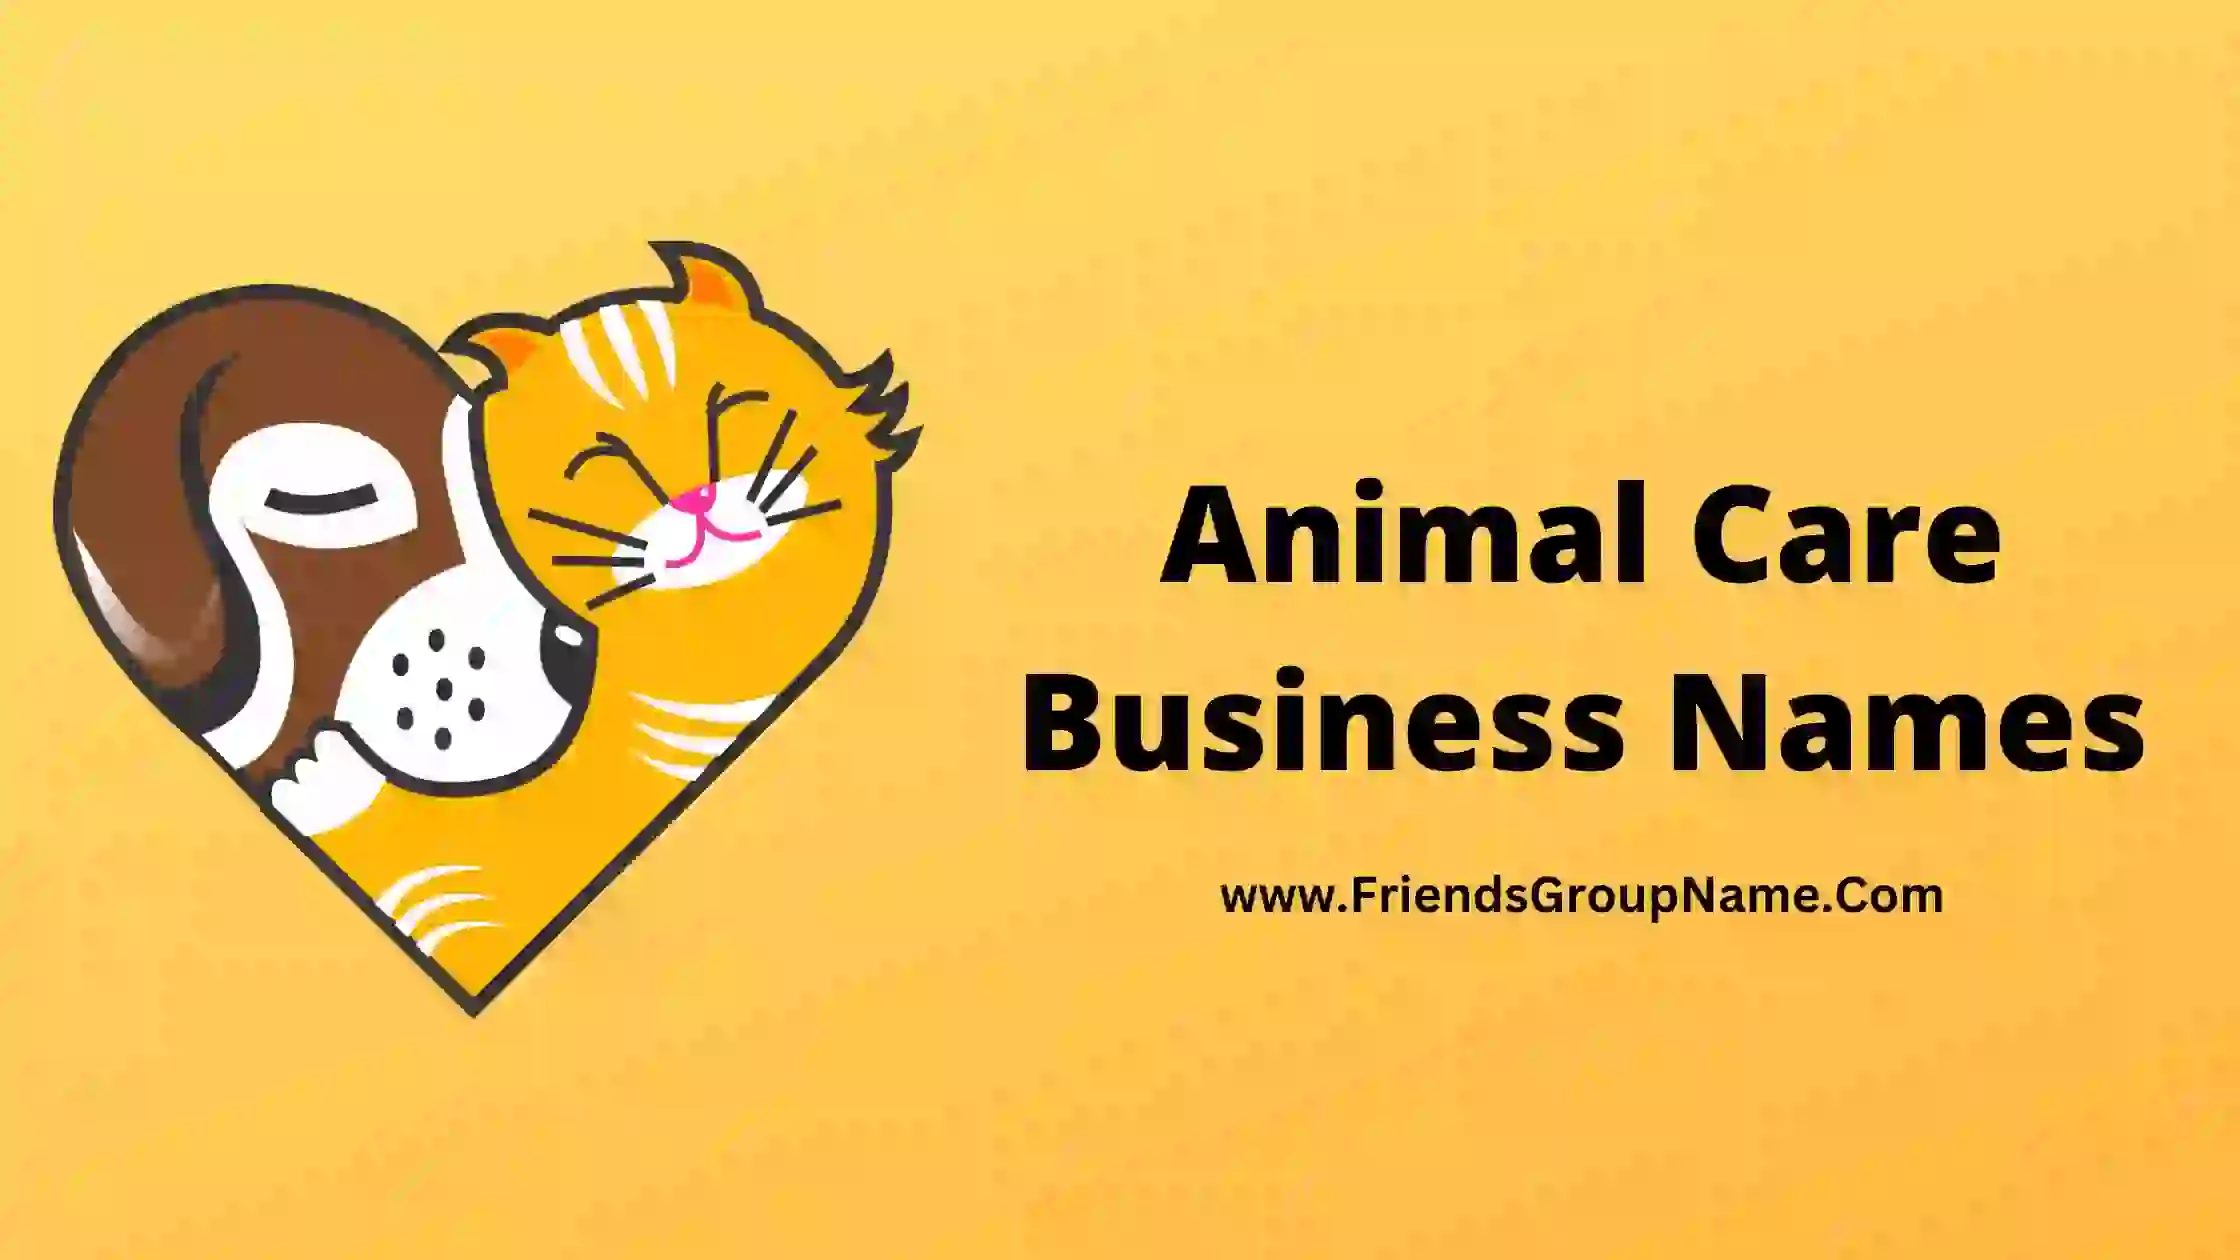 Animal Care Business Names